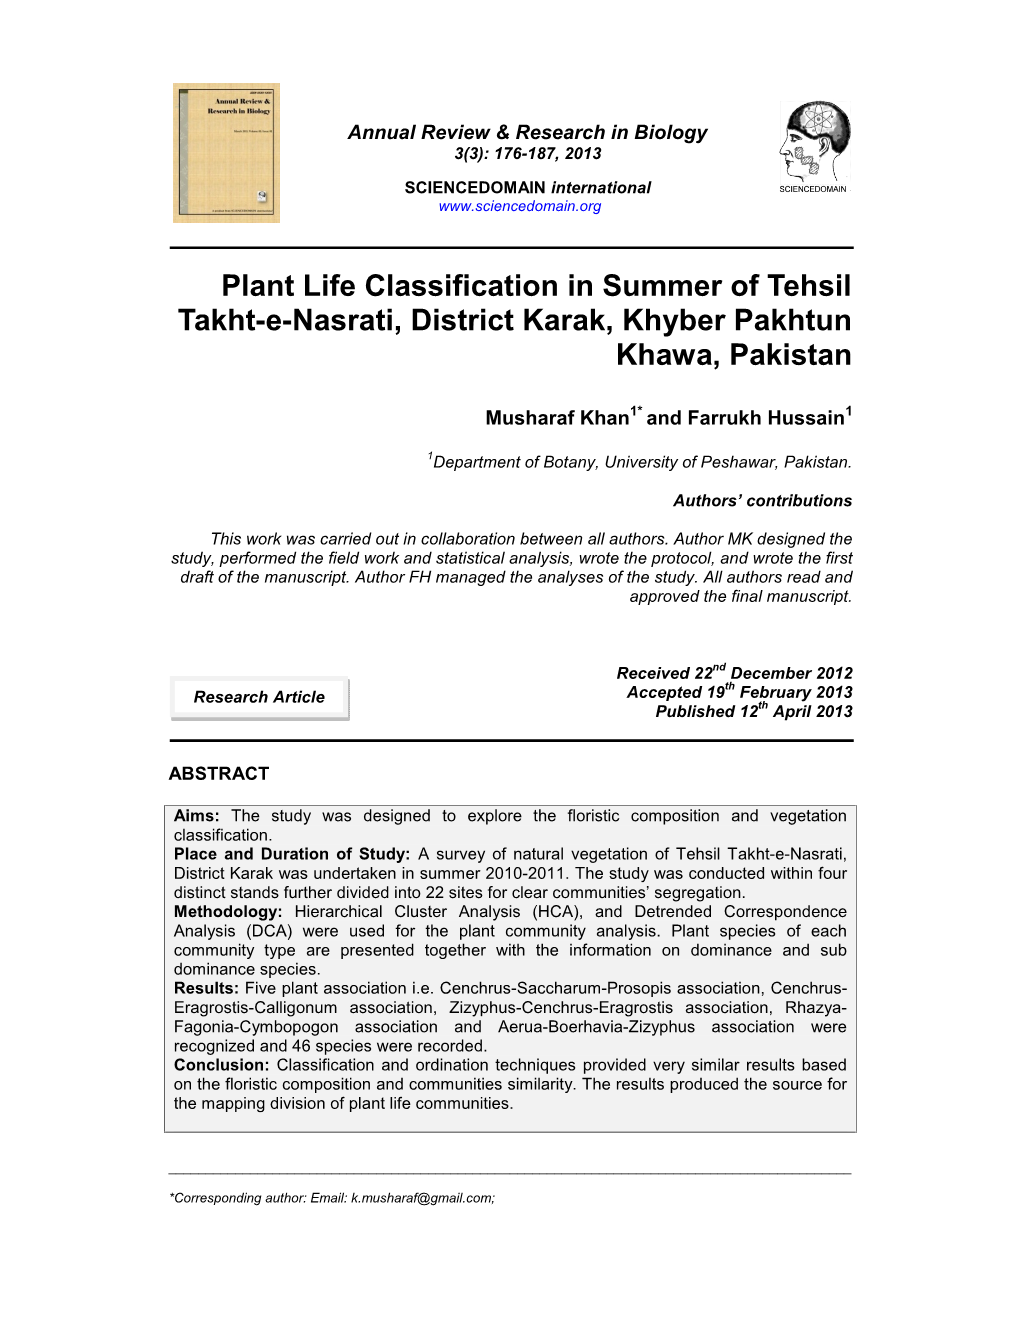 Plant Life Classification in Summer of Tehsil Takht-E-Nasrati, District Karak, Khyber Pakhtun Khawa, Pakistan